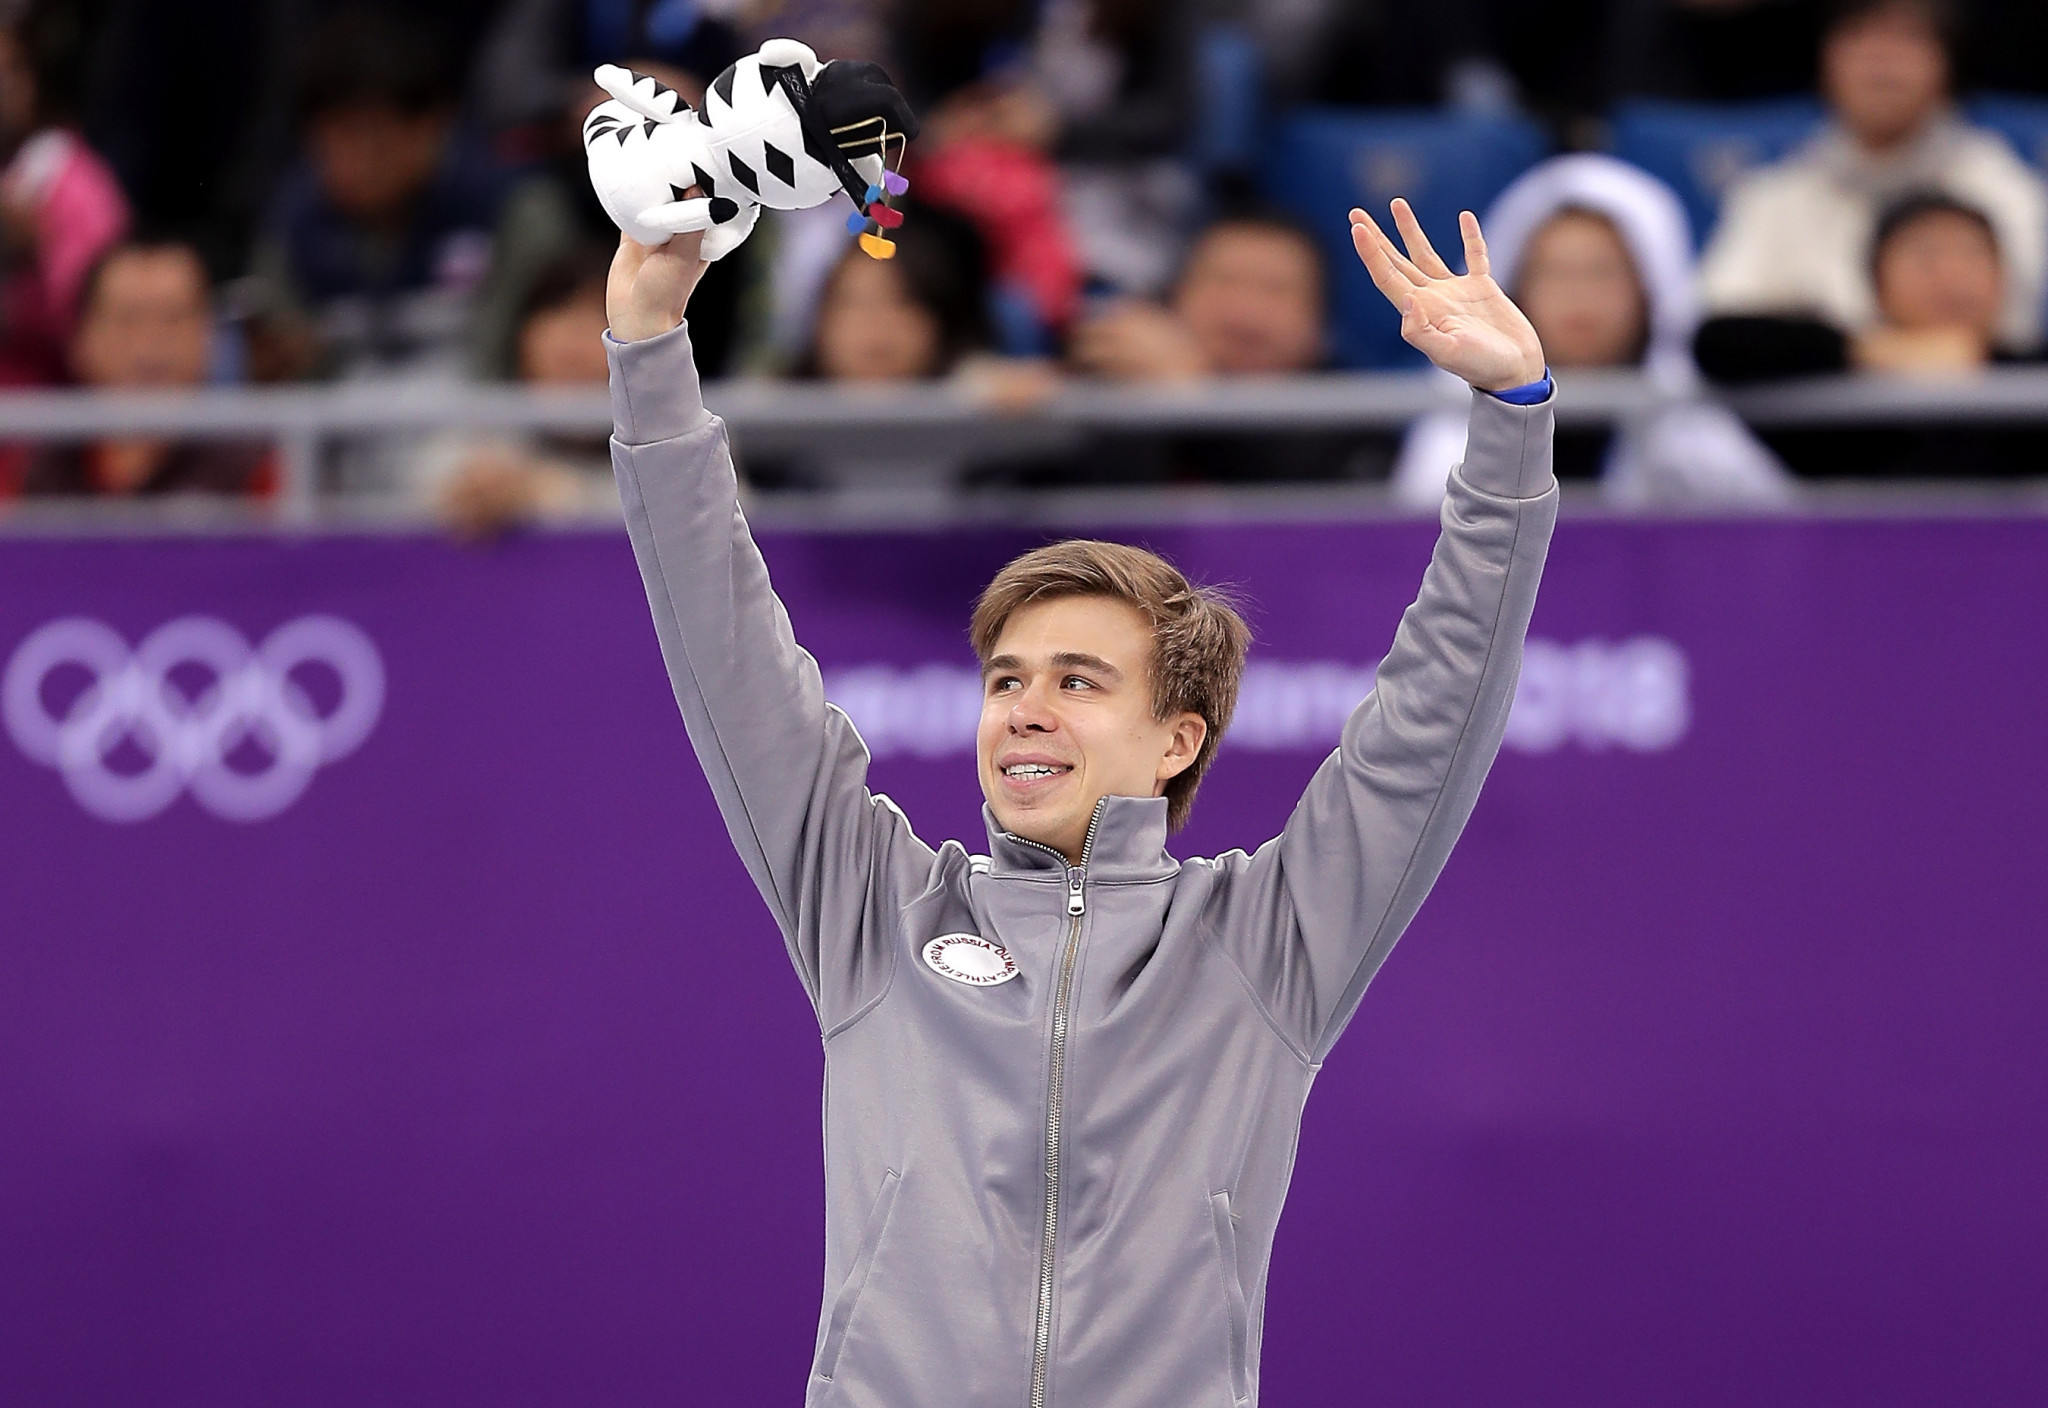 Semen Elistratov won a short-track speed skating bronze medal ©Getty Images